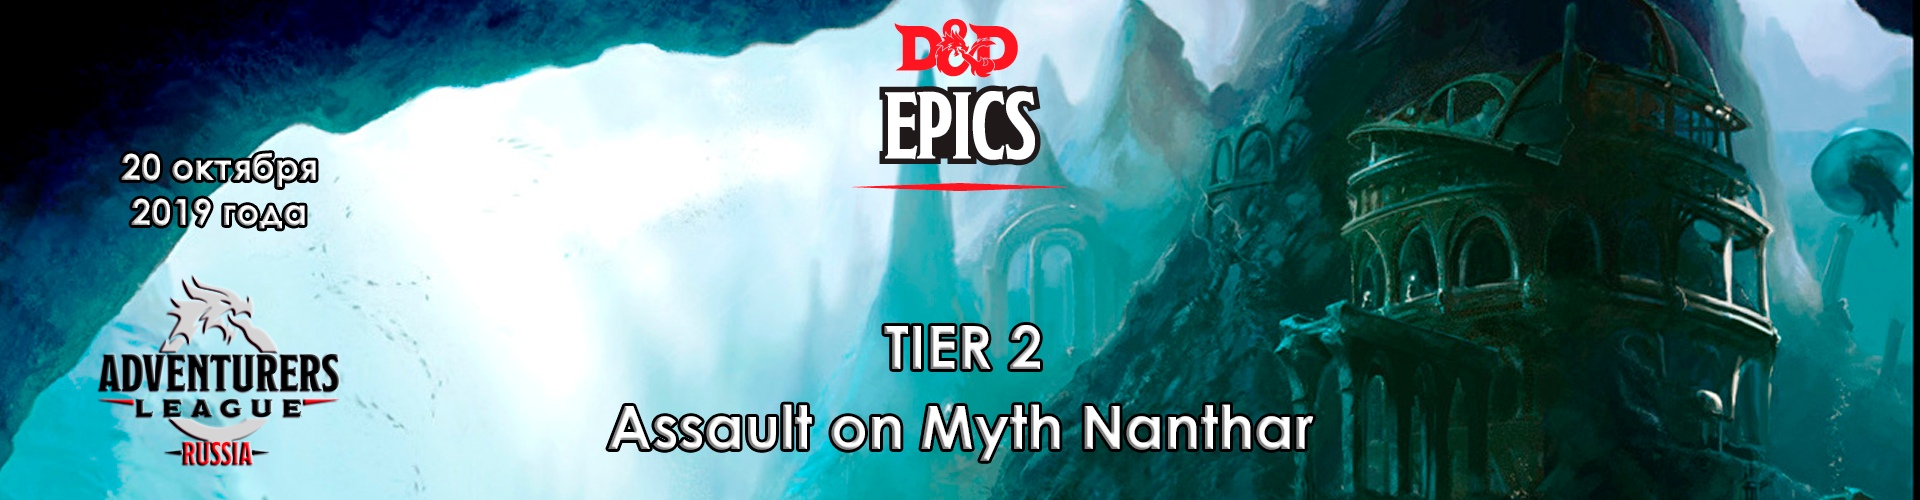 [D&D AL] Assault on Myth Nanthar - TIER 2